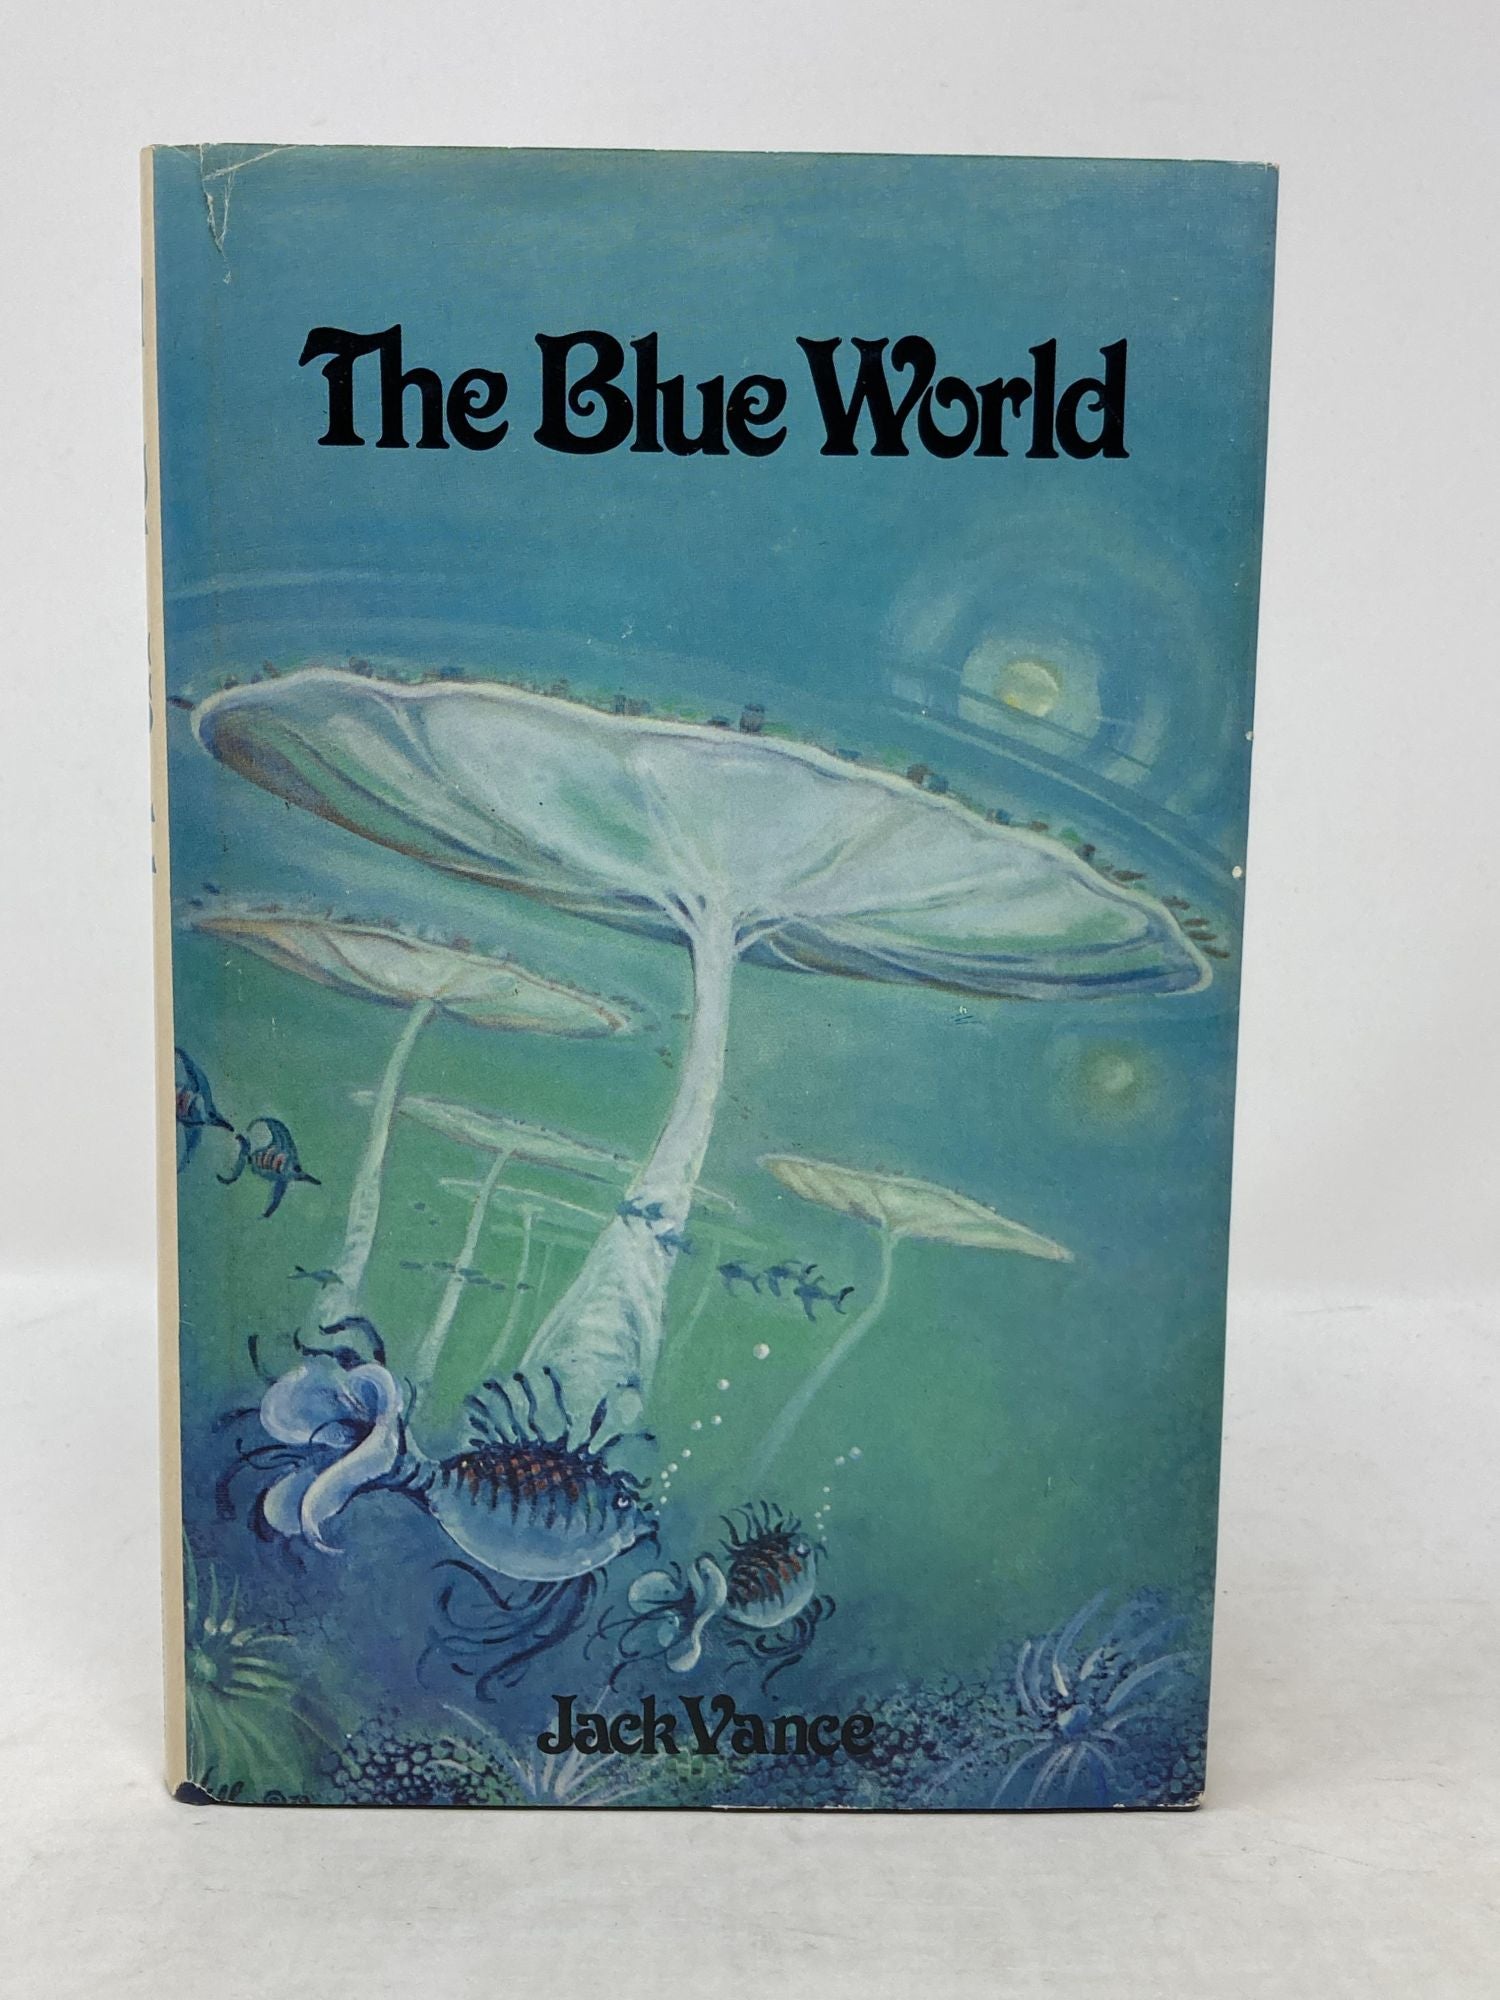 Vance, Jack - The Blue World